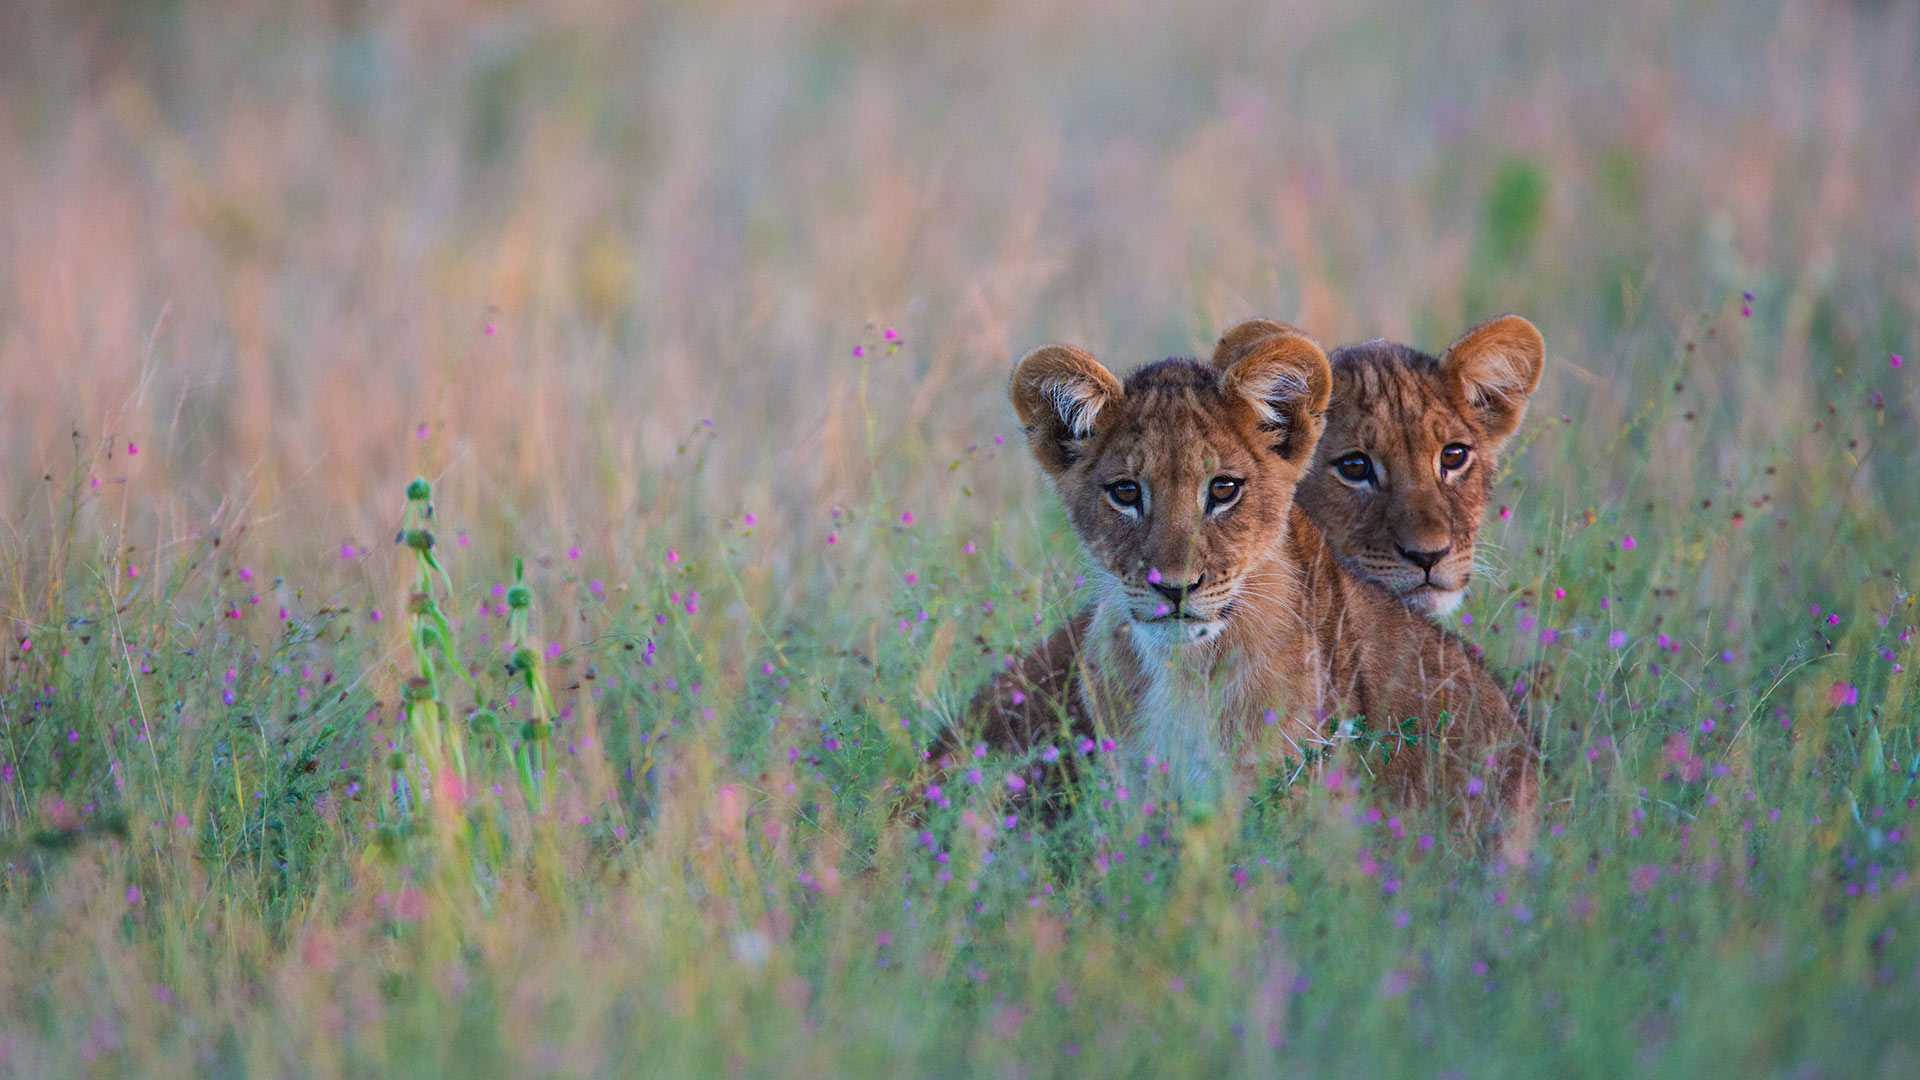 Lion cubs hiding in tall grass in the Kalahari Desert region of Botswana - Jami Tarris/Getty Images)